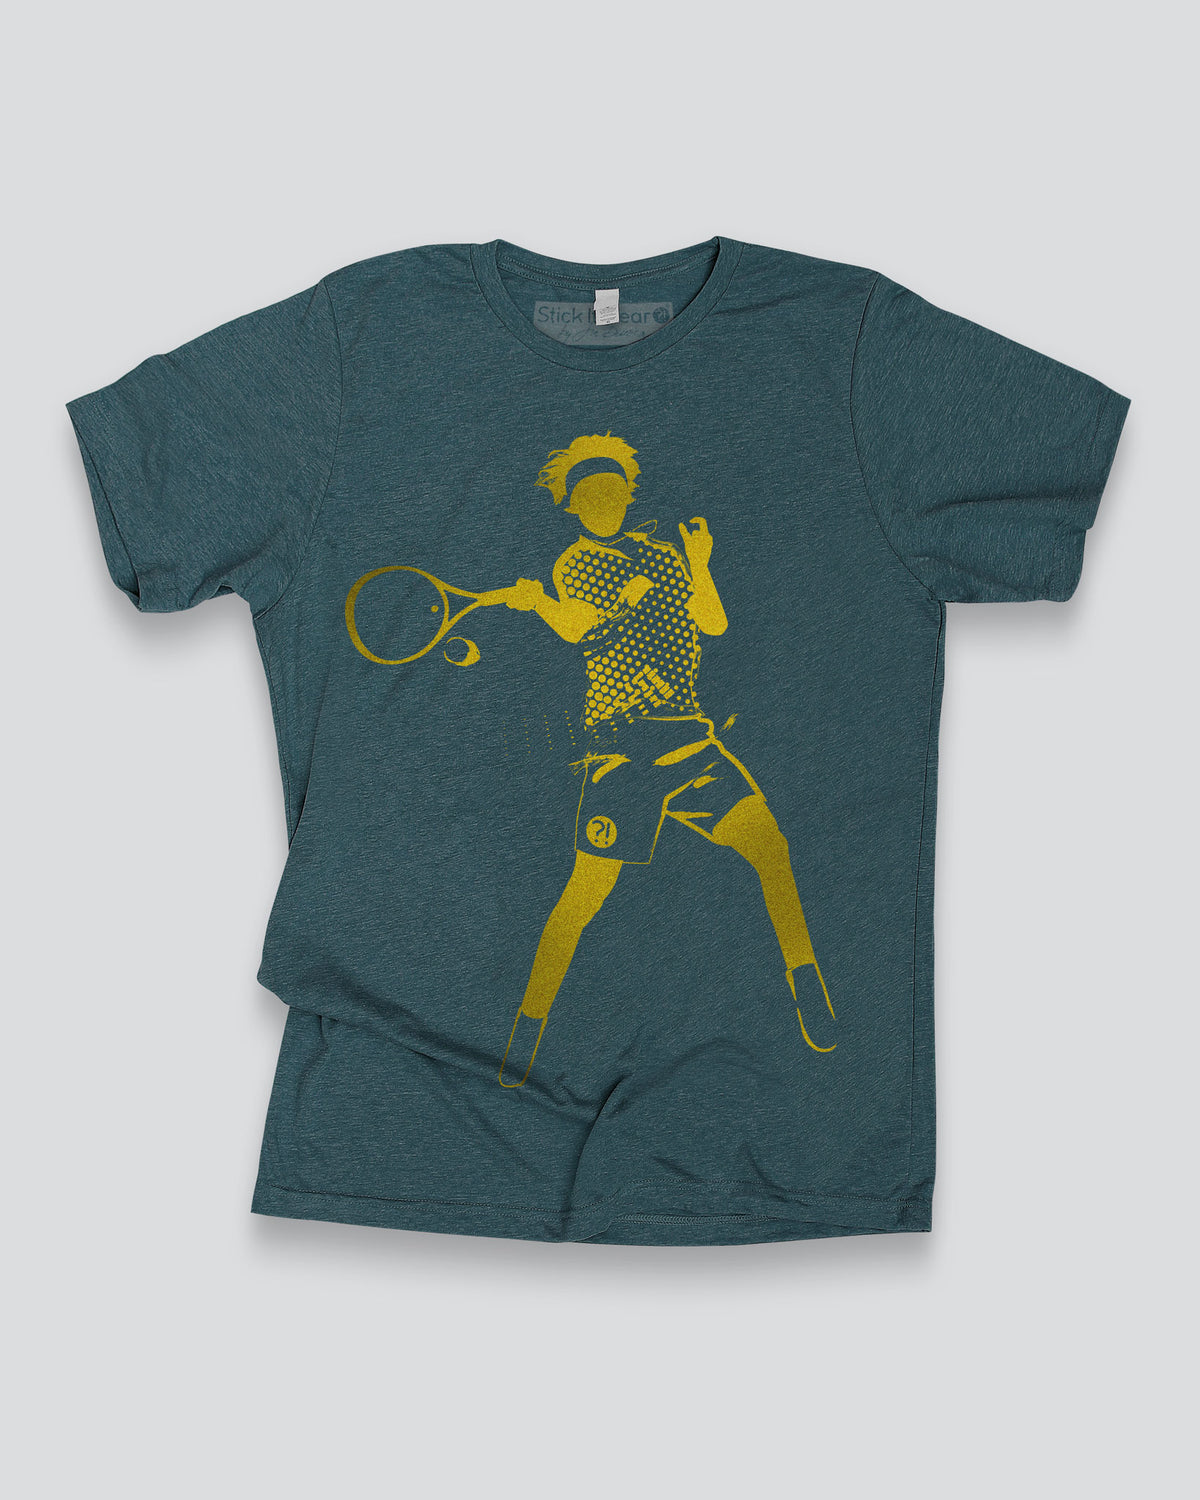 HI REZEV Tennis Stance T-Shirt